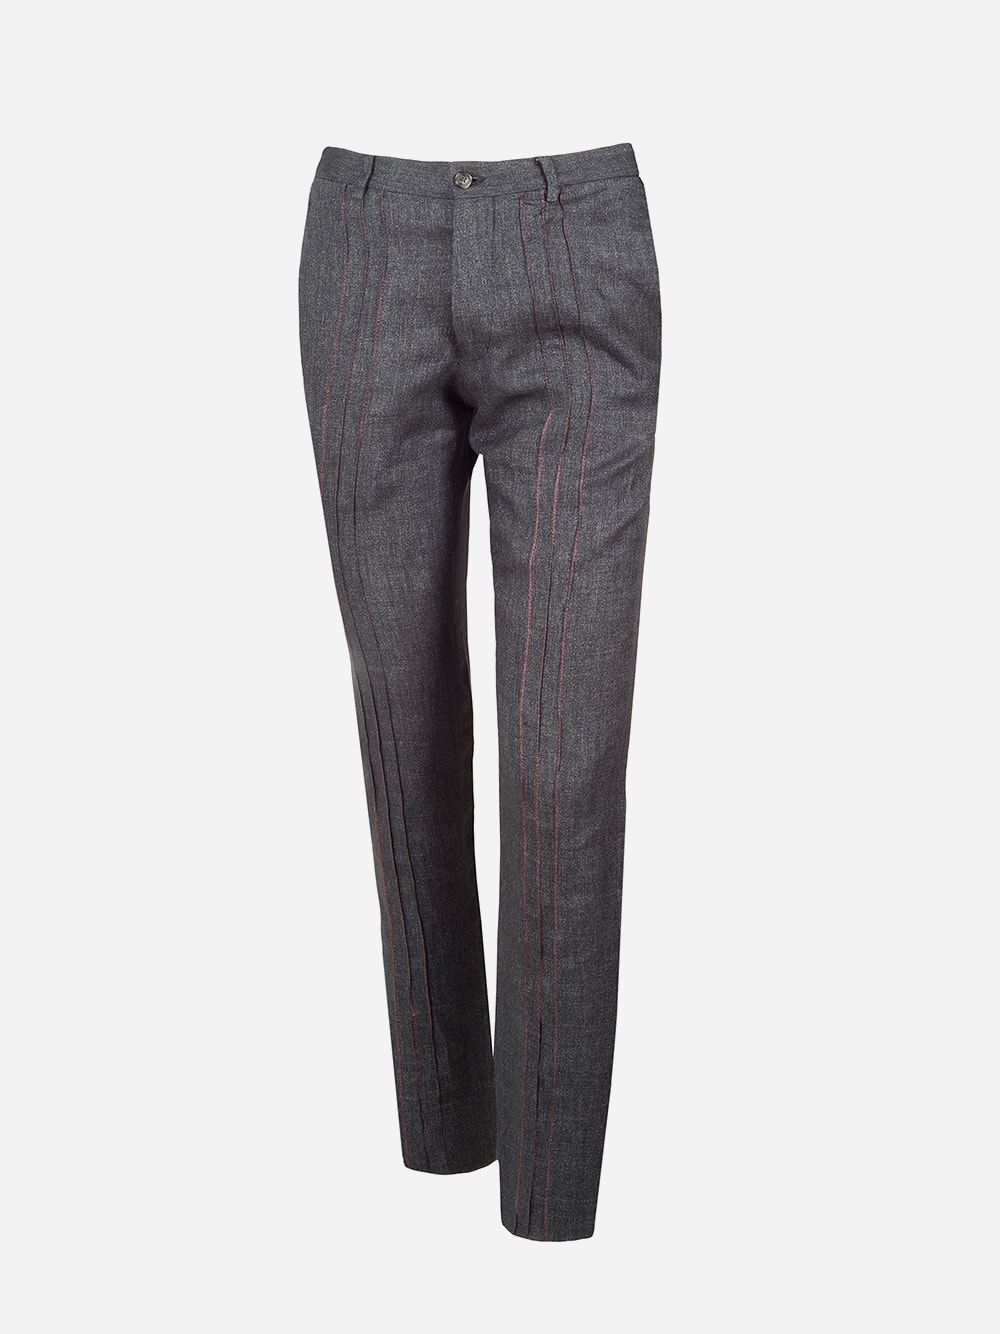 Grey Ribs Trousers | Nair Xavier